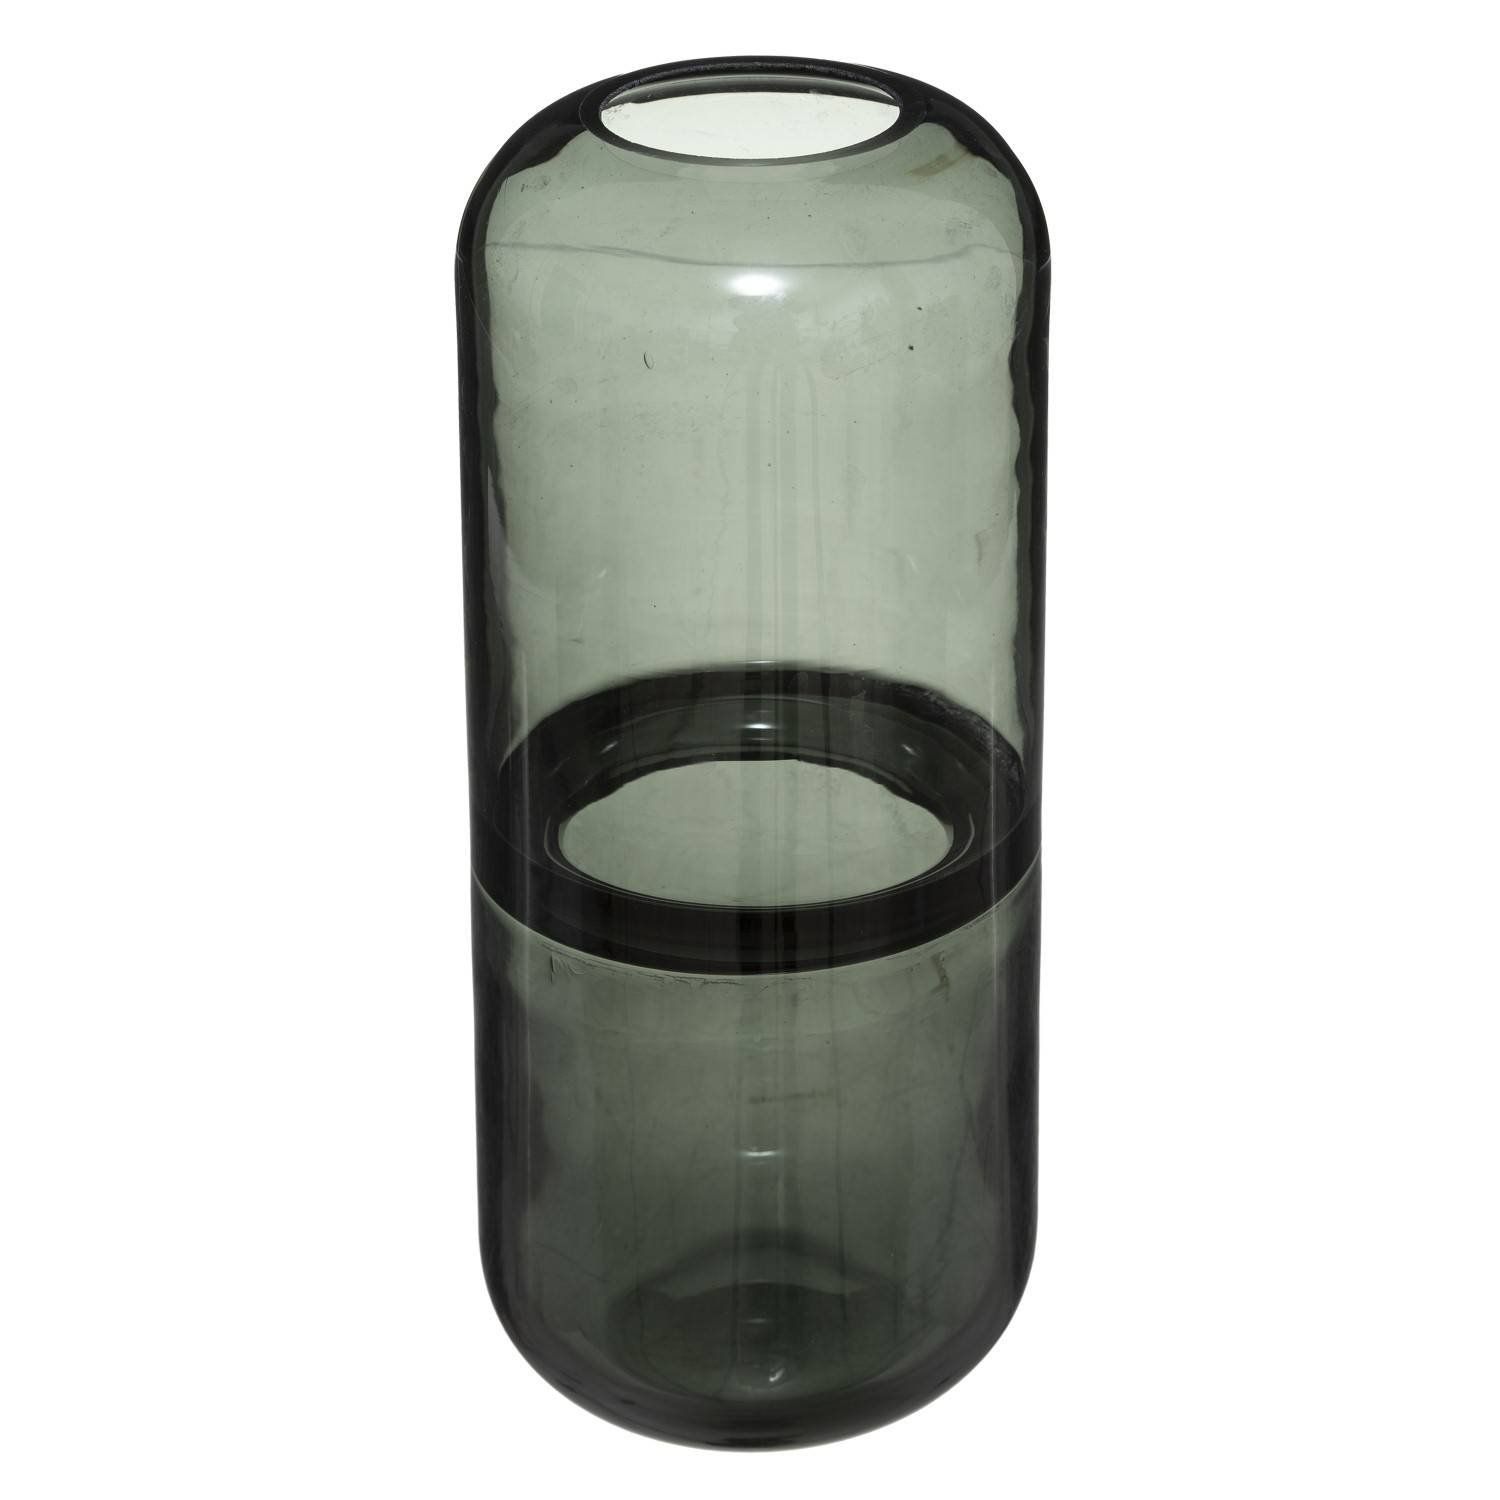 Atmosphera Skleněná váza, šedá, 25 cm - EDAXO.CZ s.r.o.